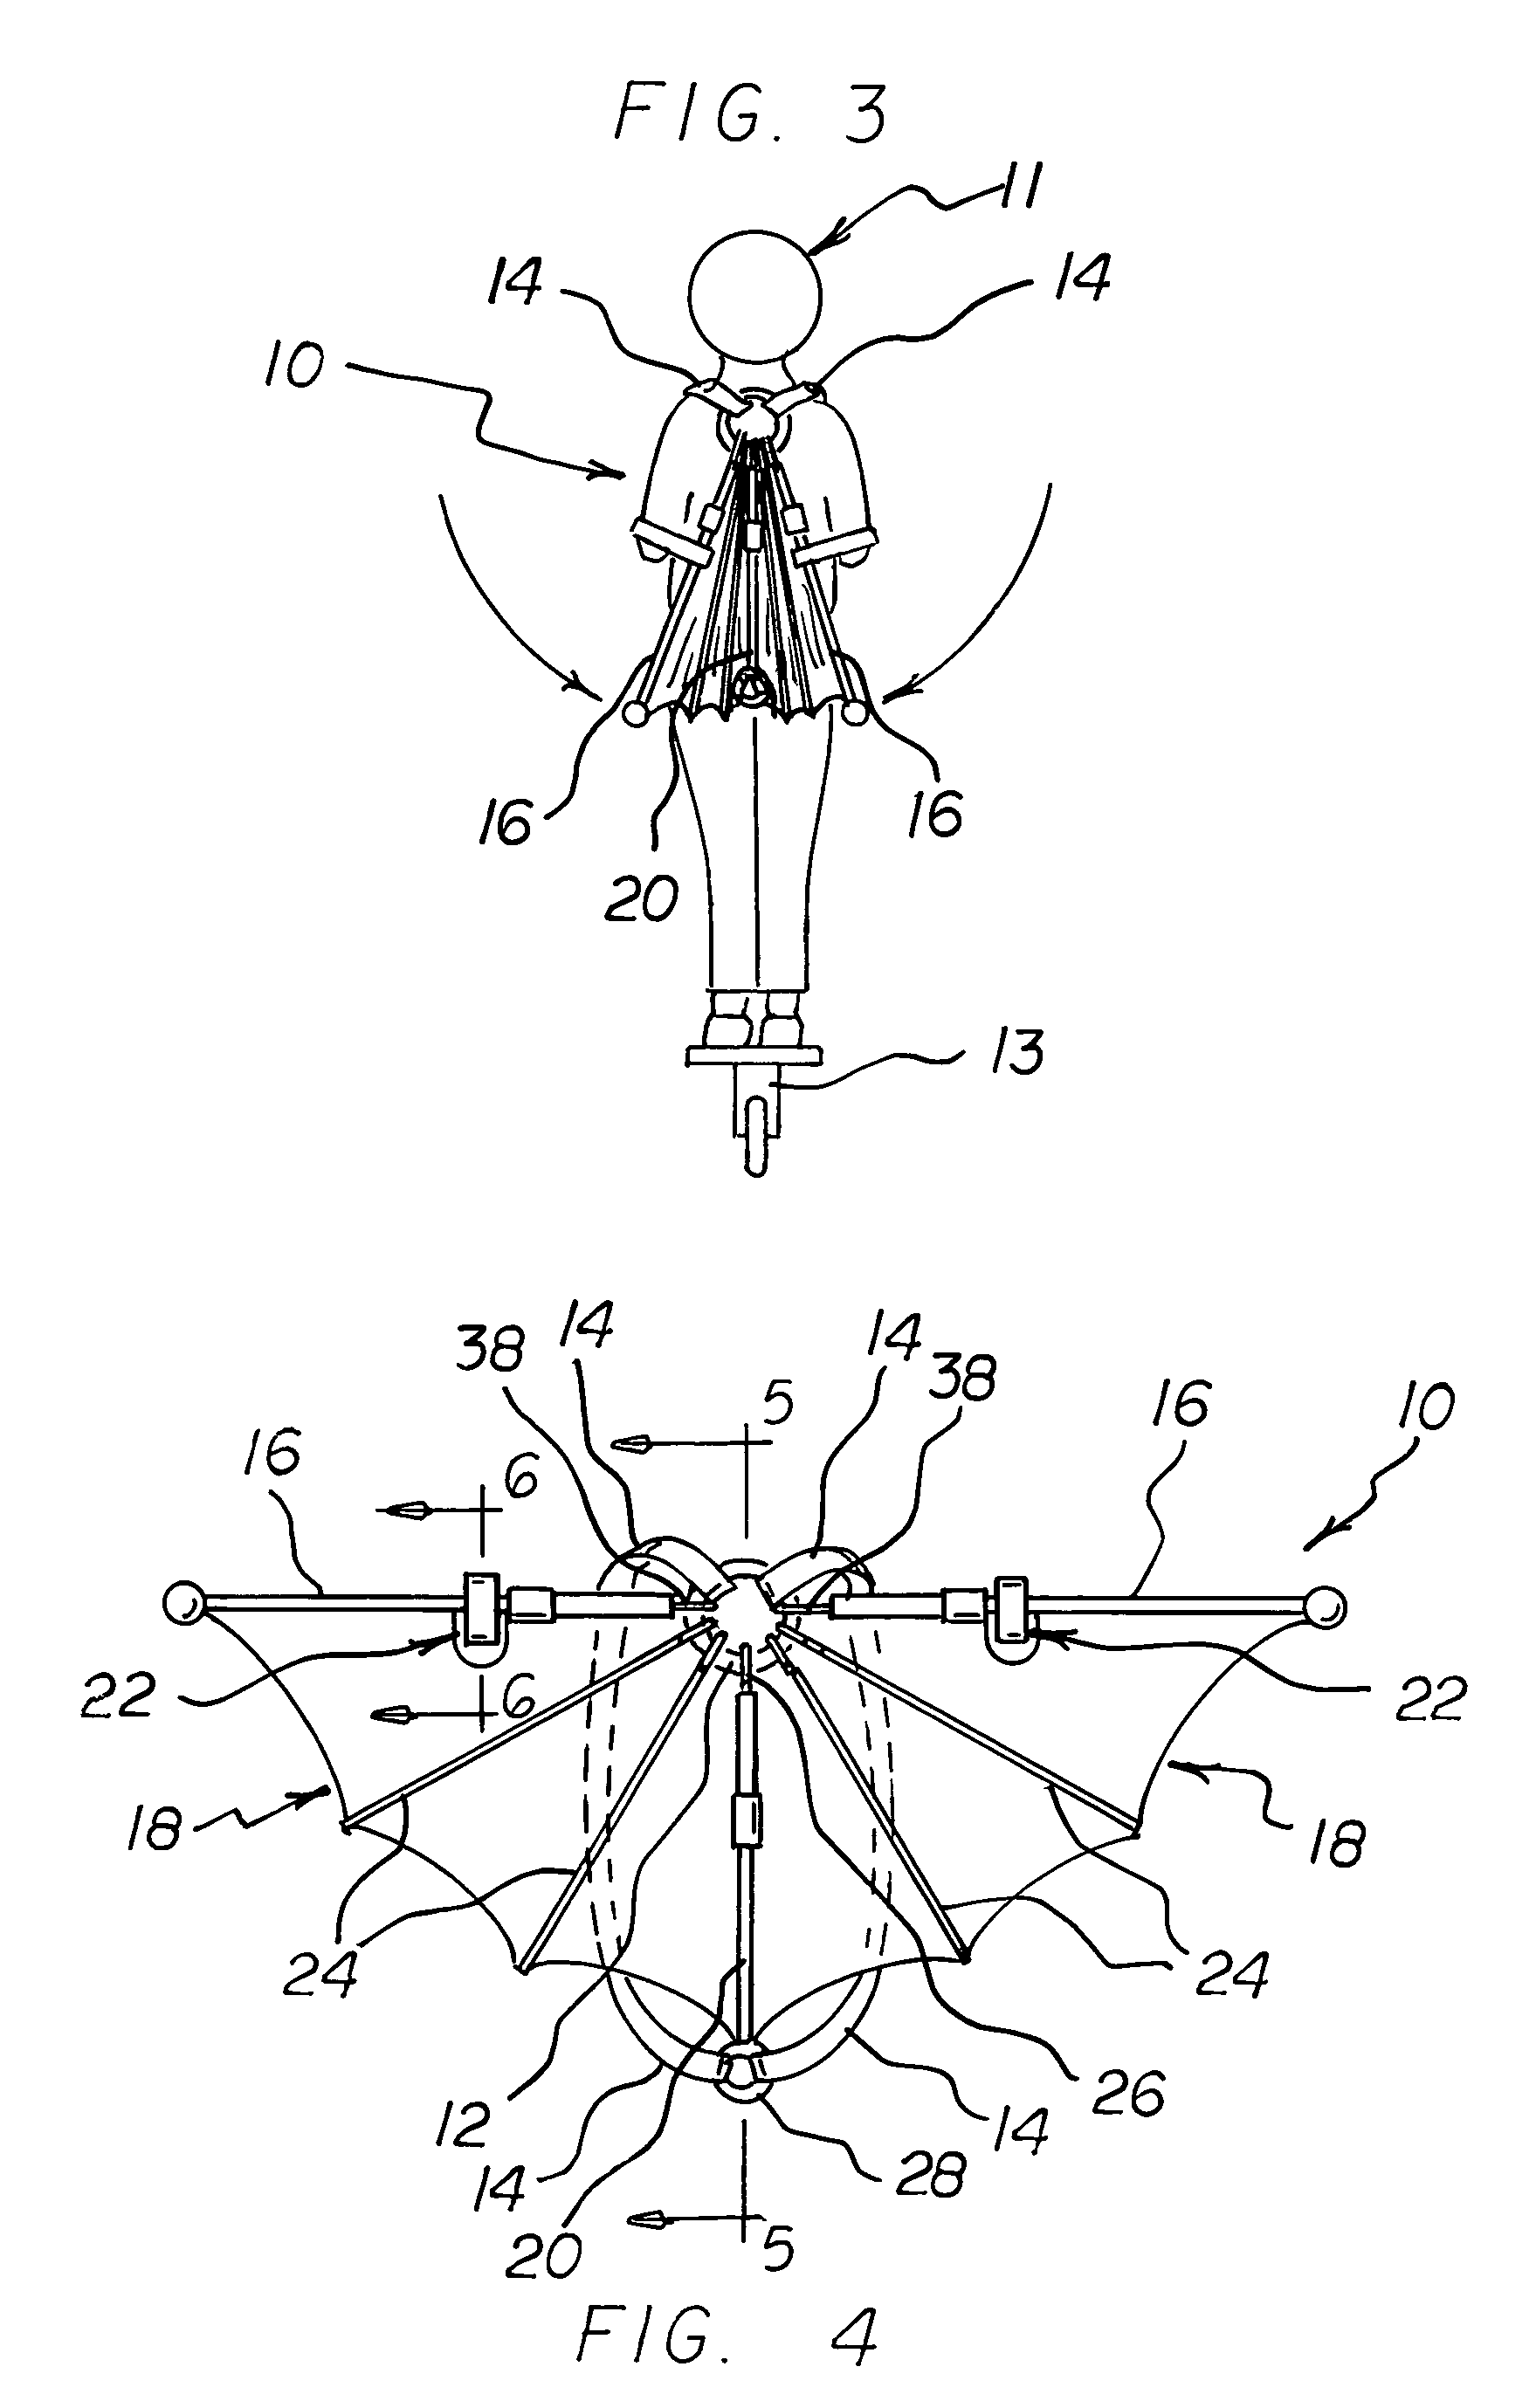 Wearable folding wing apparatus